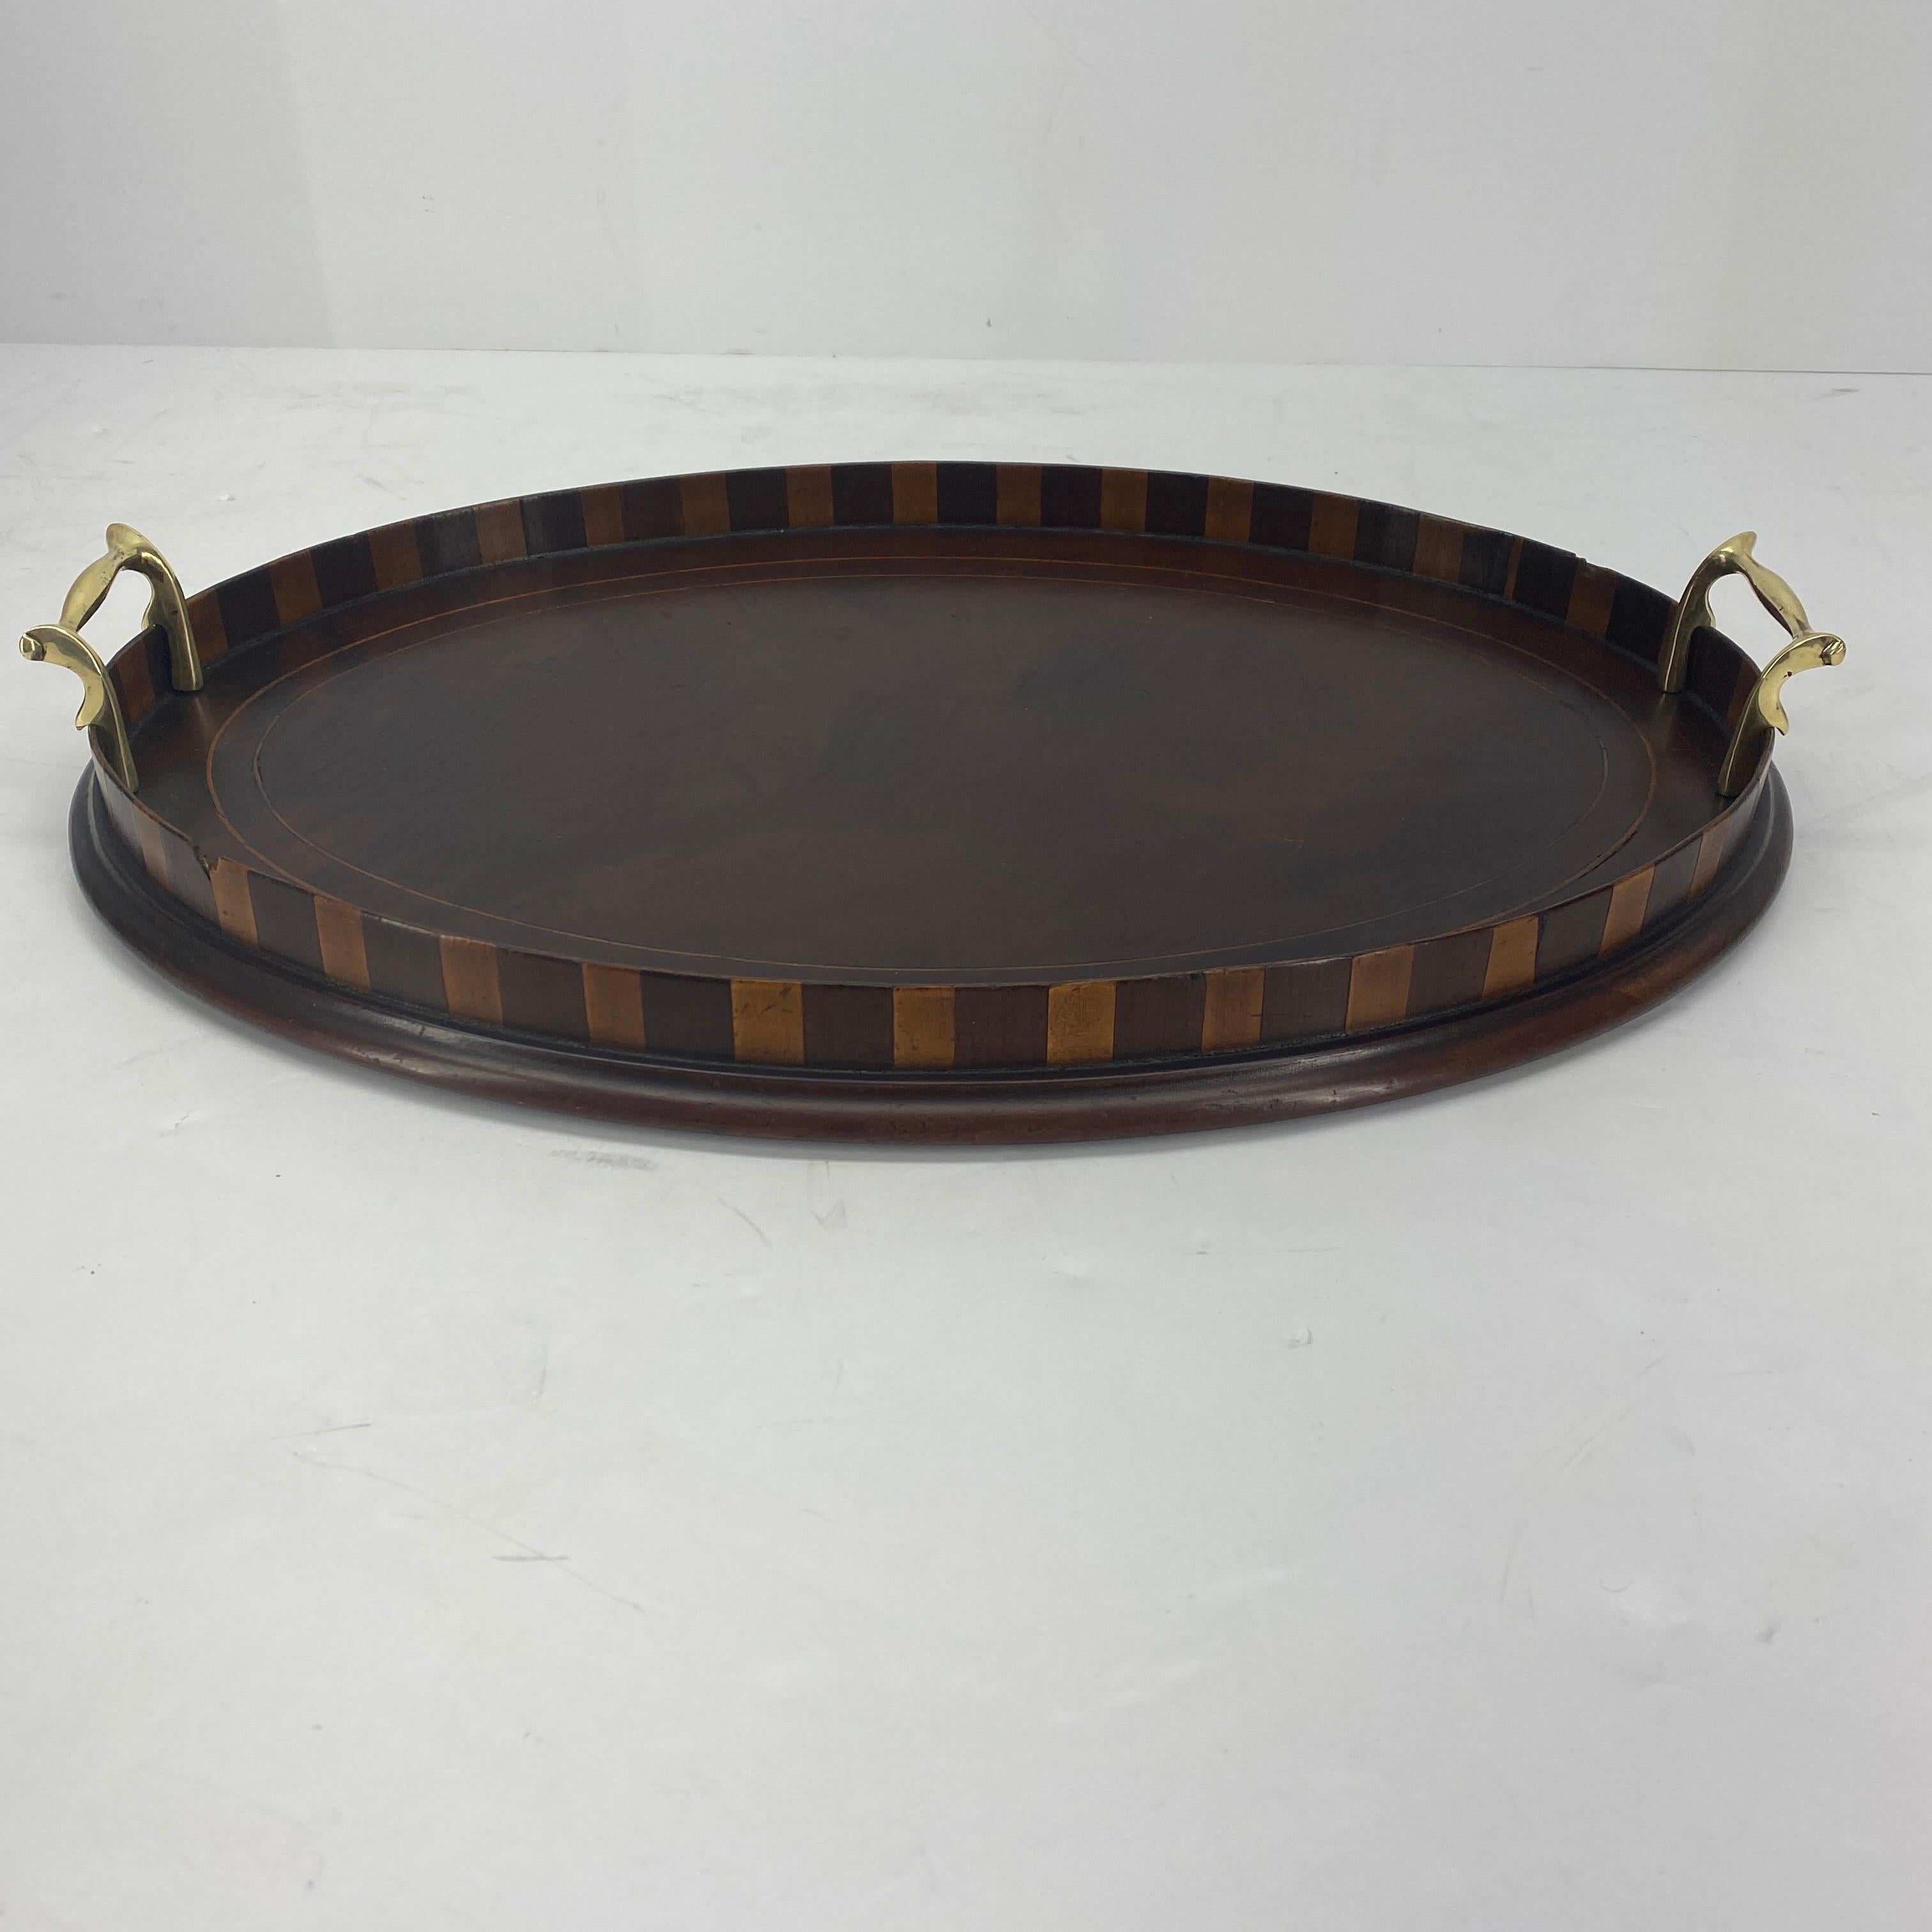 Small oval Edwardian mahogany and citrus inlaid bar tray with original brass handles.

    